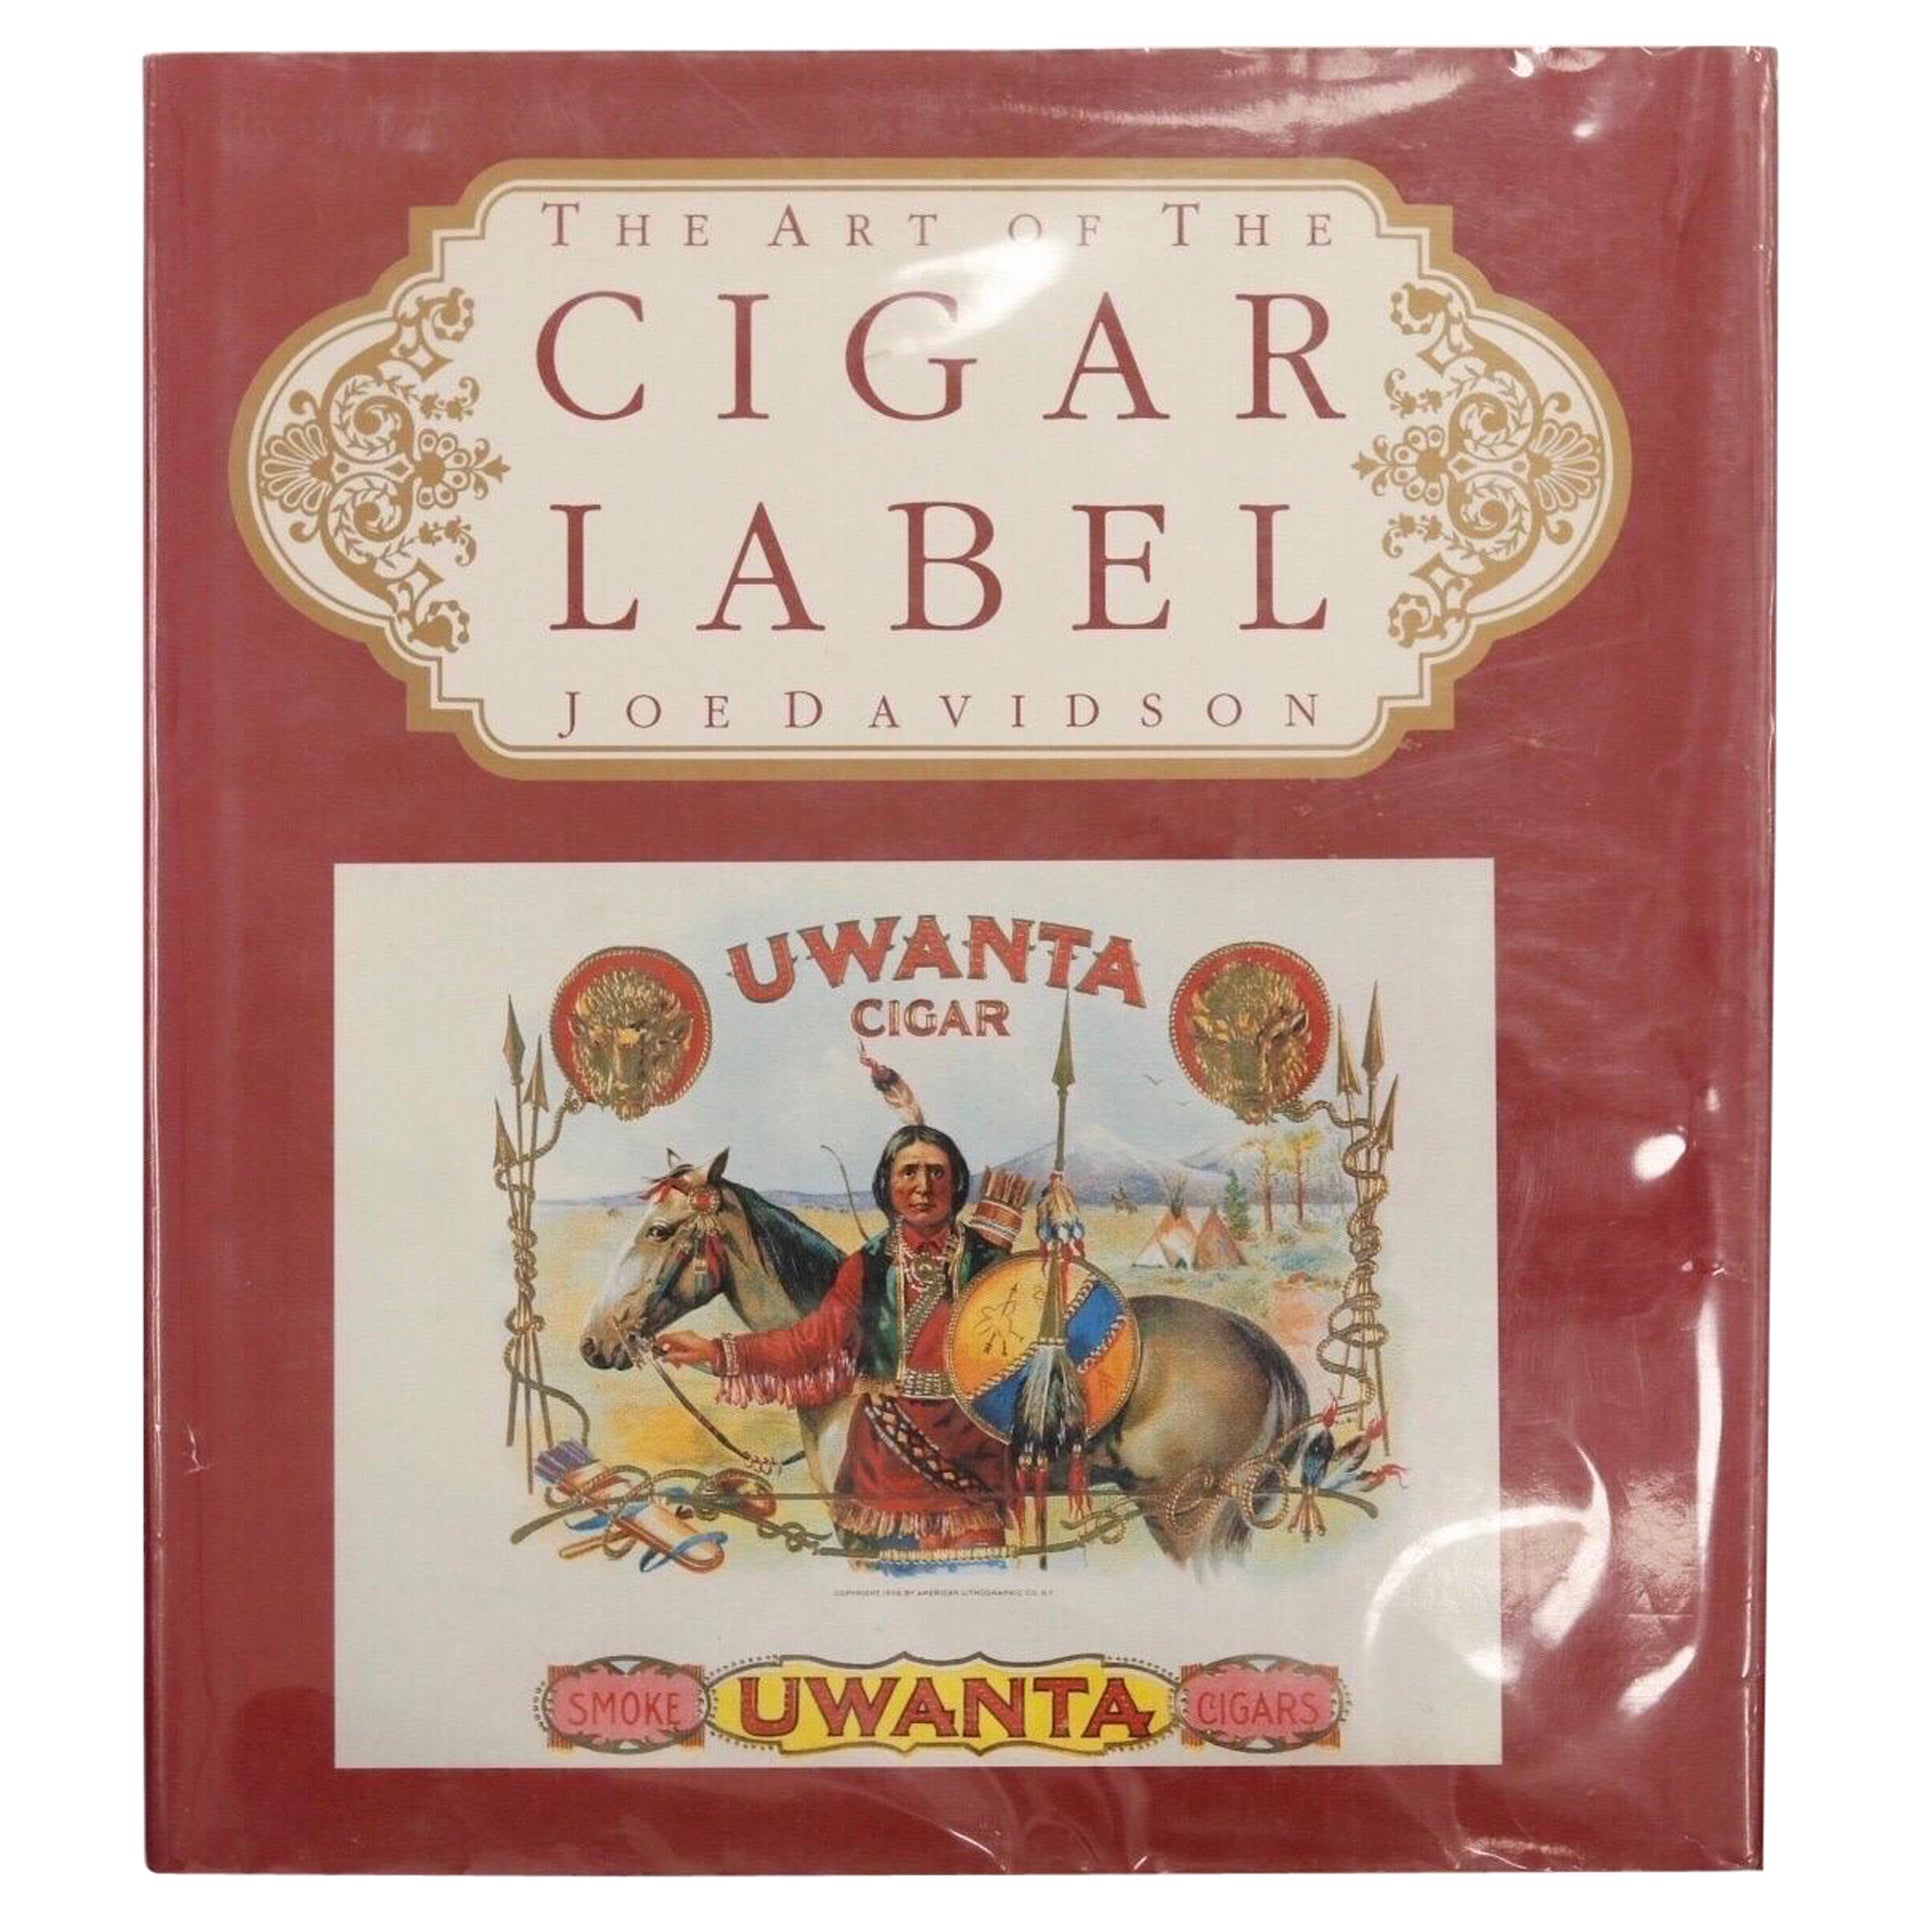 The Art of the Cigar Label by Joe Davidson